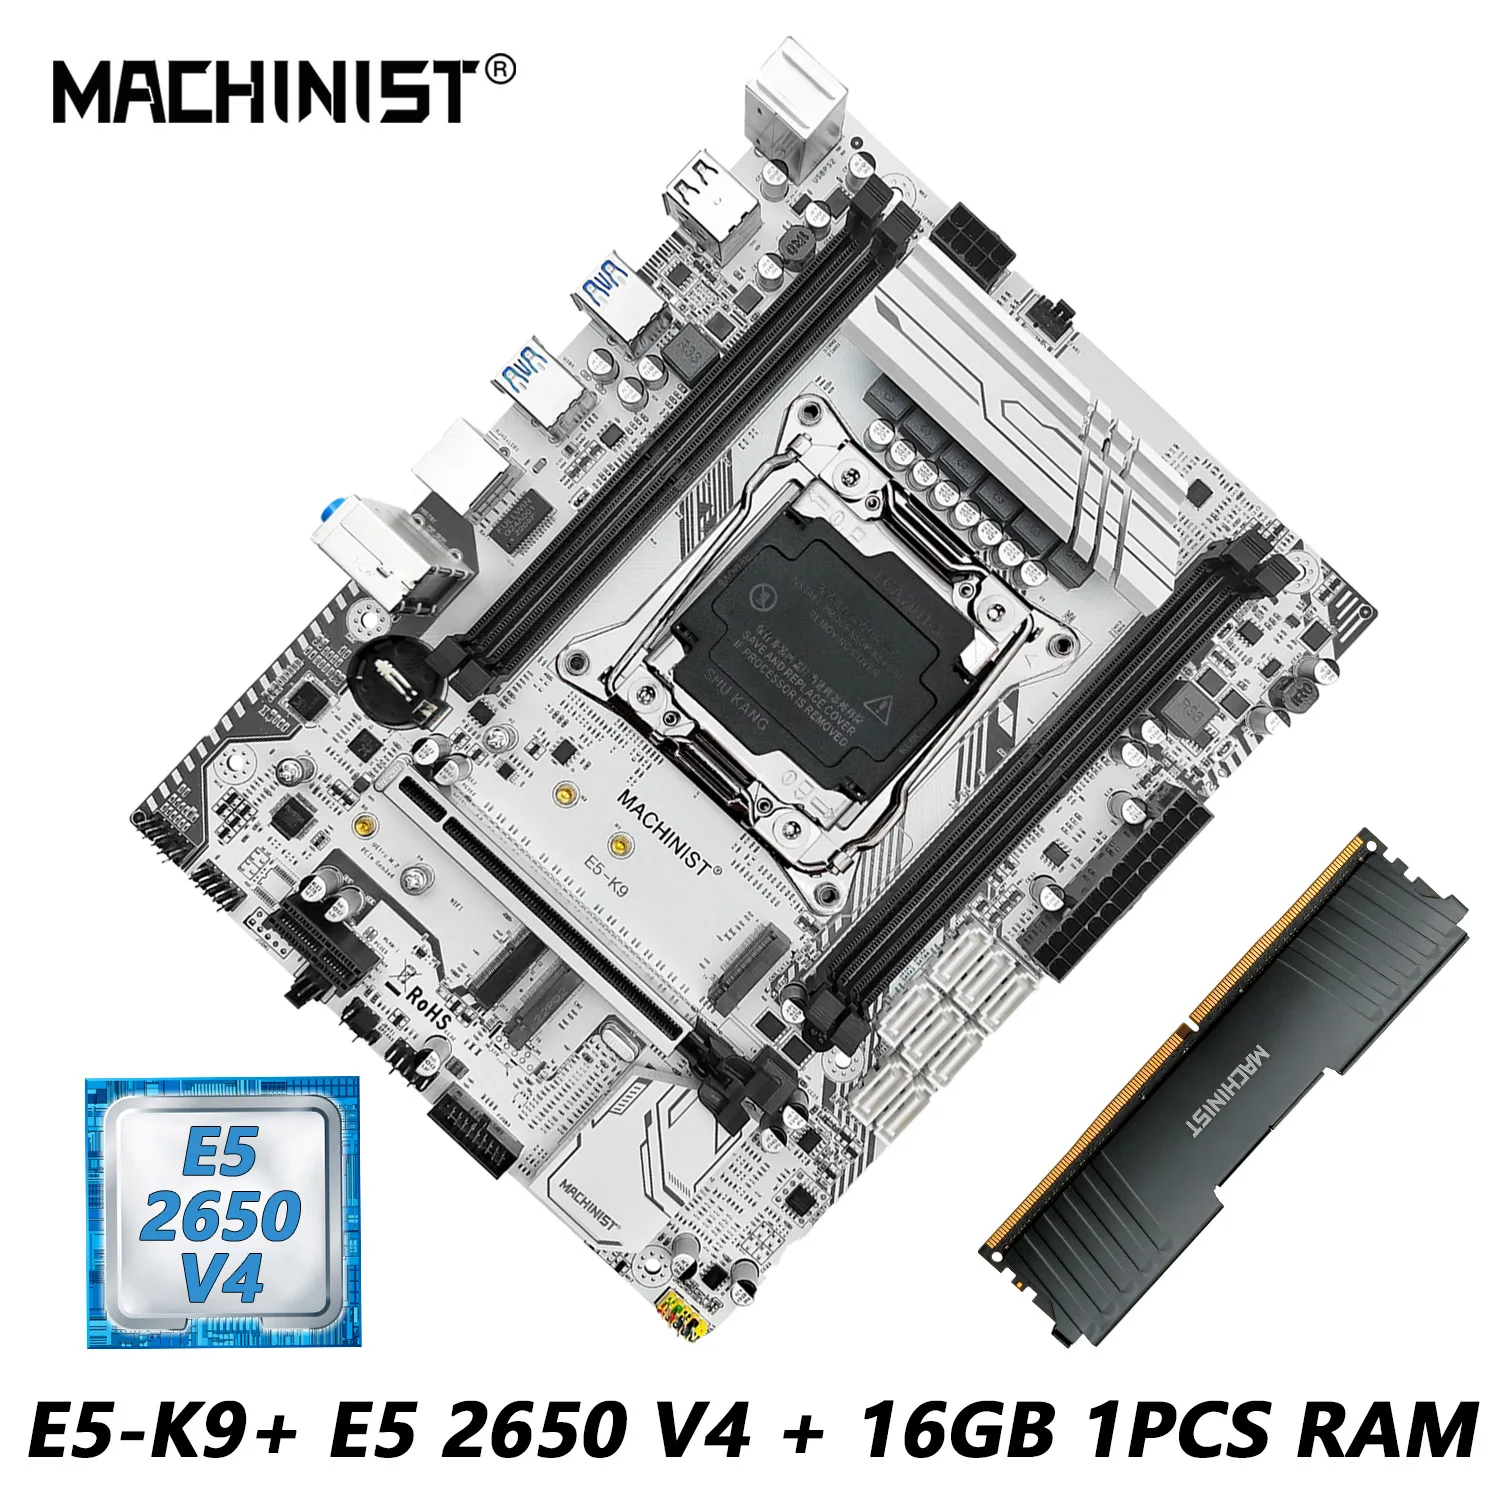 

MACHINIS X99 Motherboard Set Kit Intel Xeon E5 2650 V4 Processor LGA 2011-3 CPU + 16GB DDR4 2133MHz RAM Memory Combo USB3.0 K9